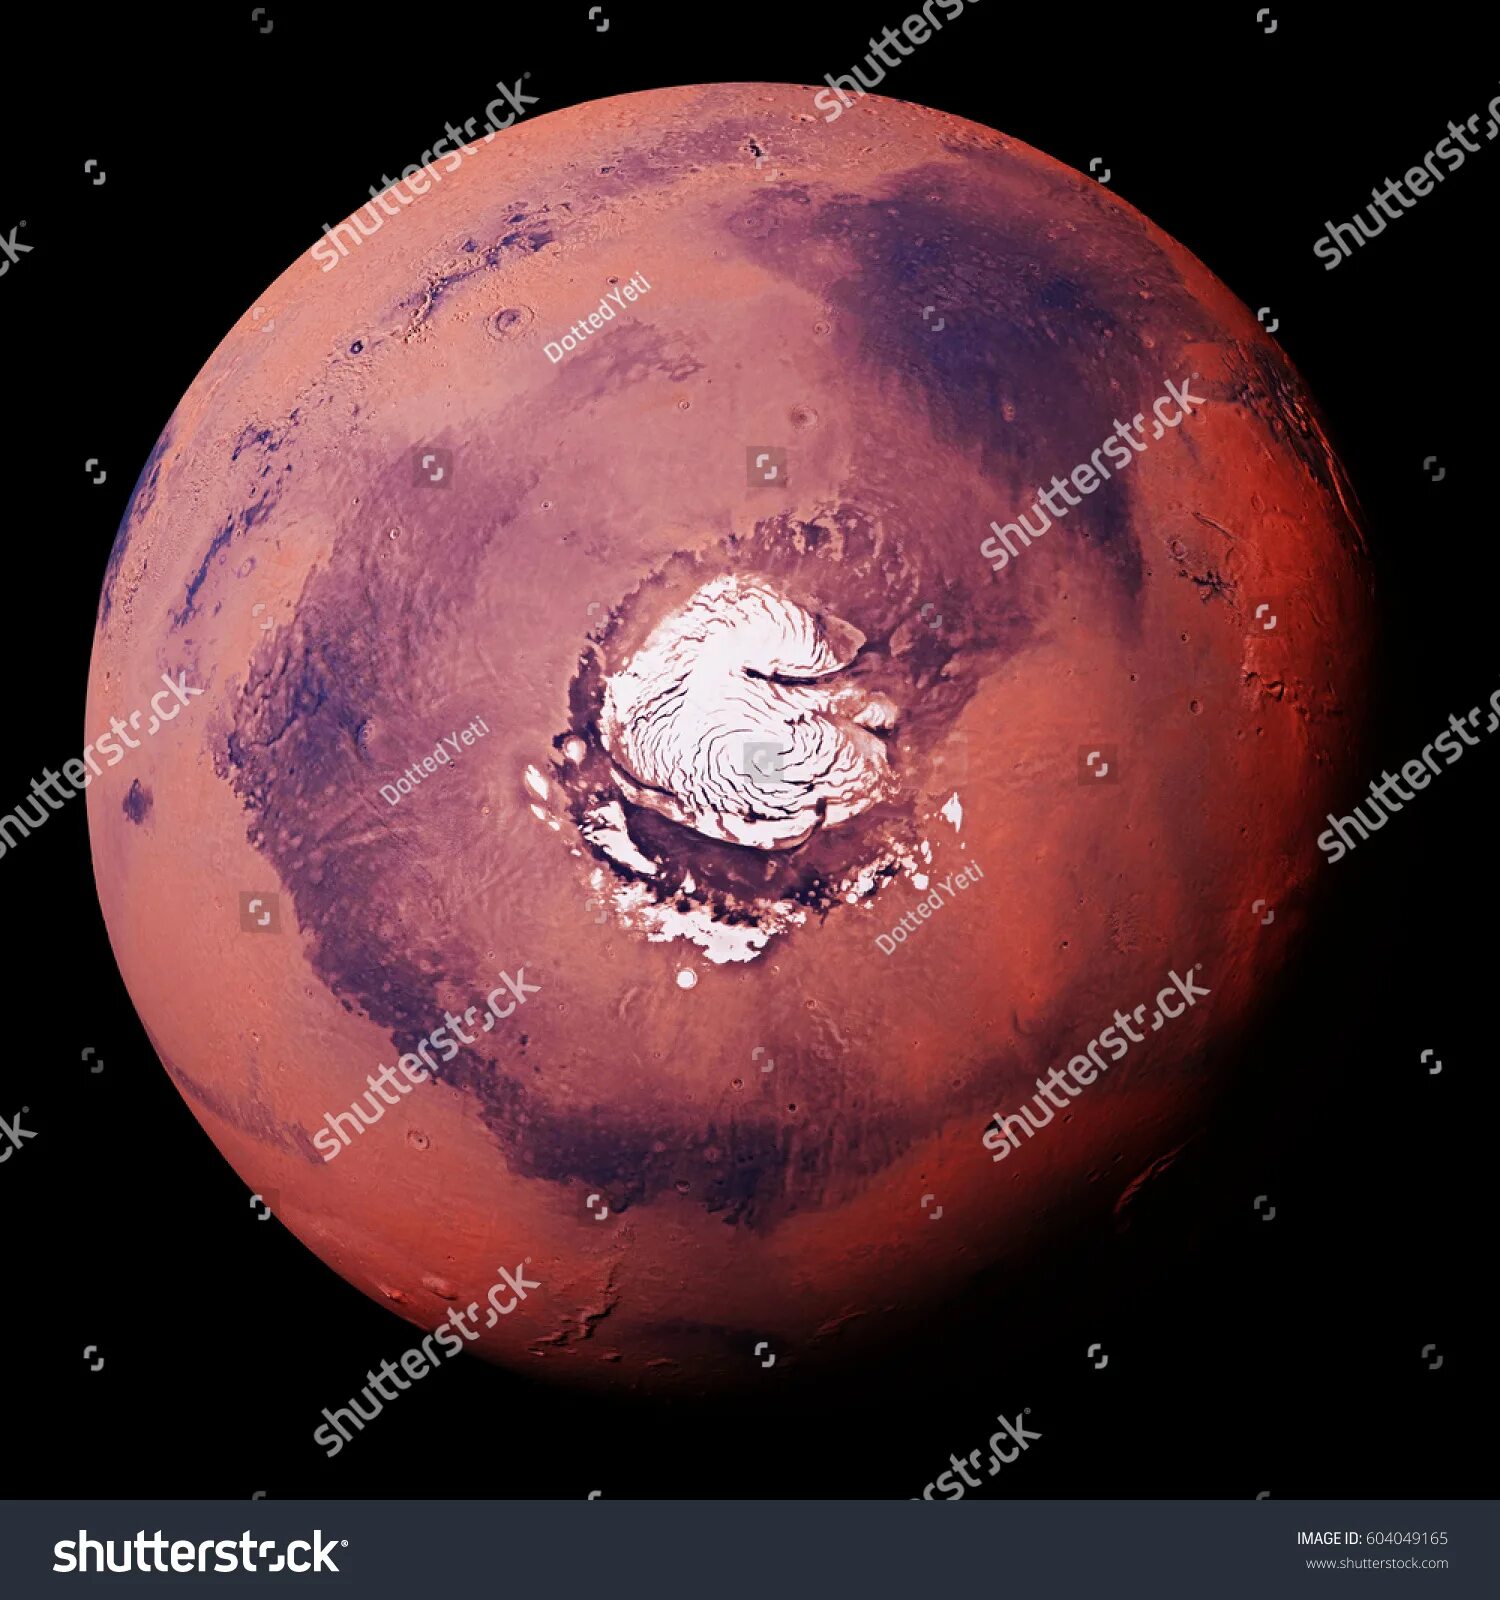 The other side of mars. Марс Планета Полярные шапки. Южная Полярная шапка Марса. Марс Планета полюса. На Марсе.